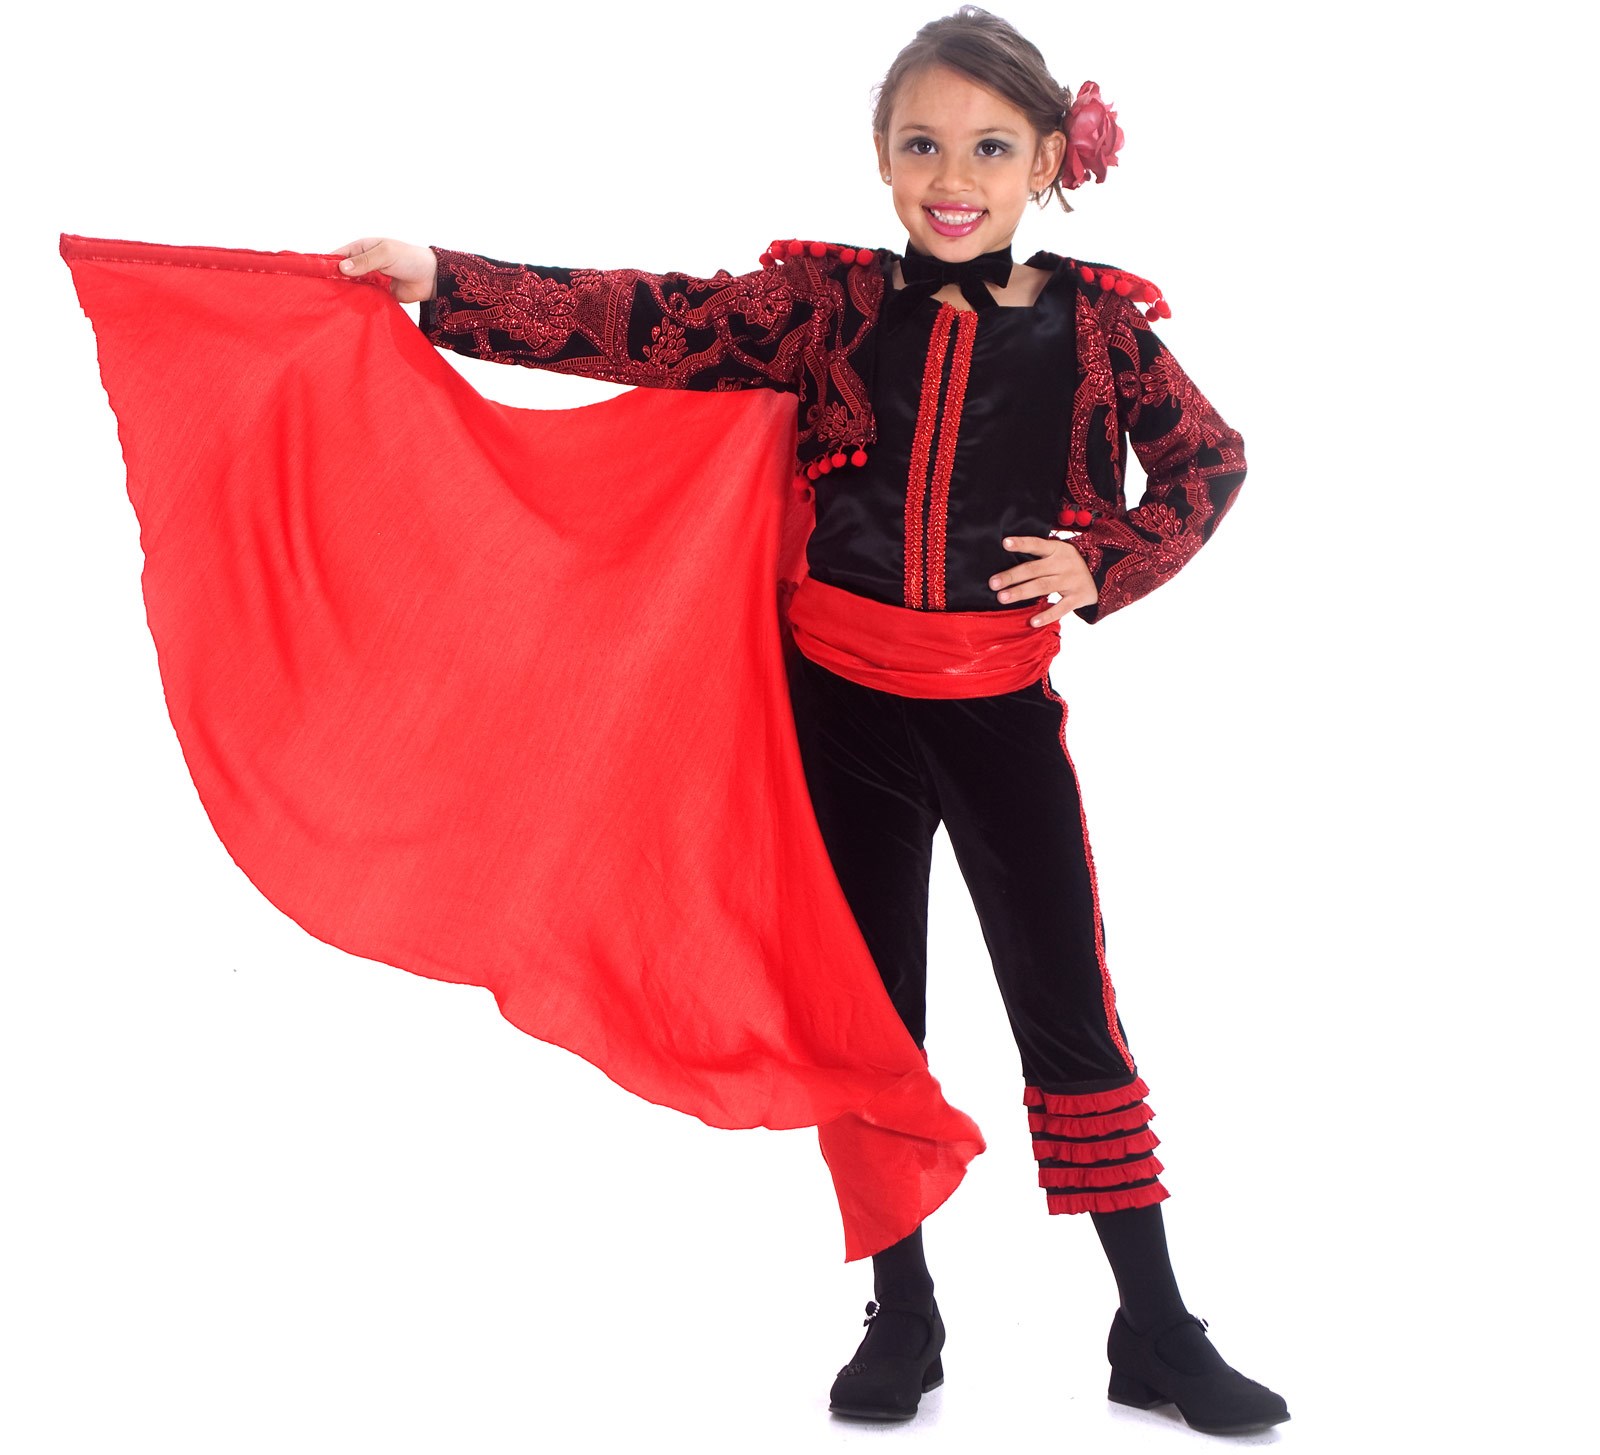 Maria the Matador Child Costume - Large (10)